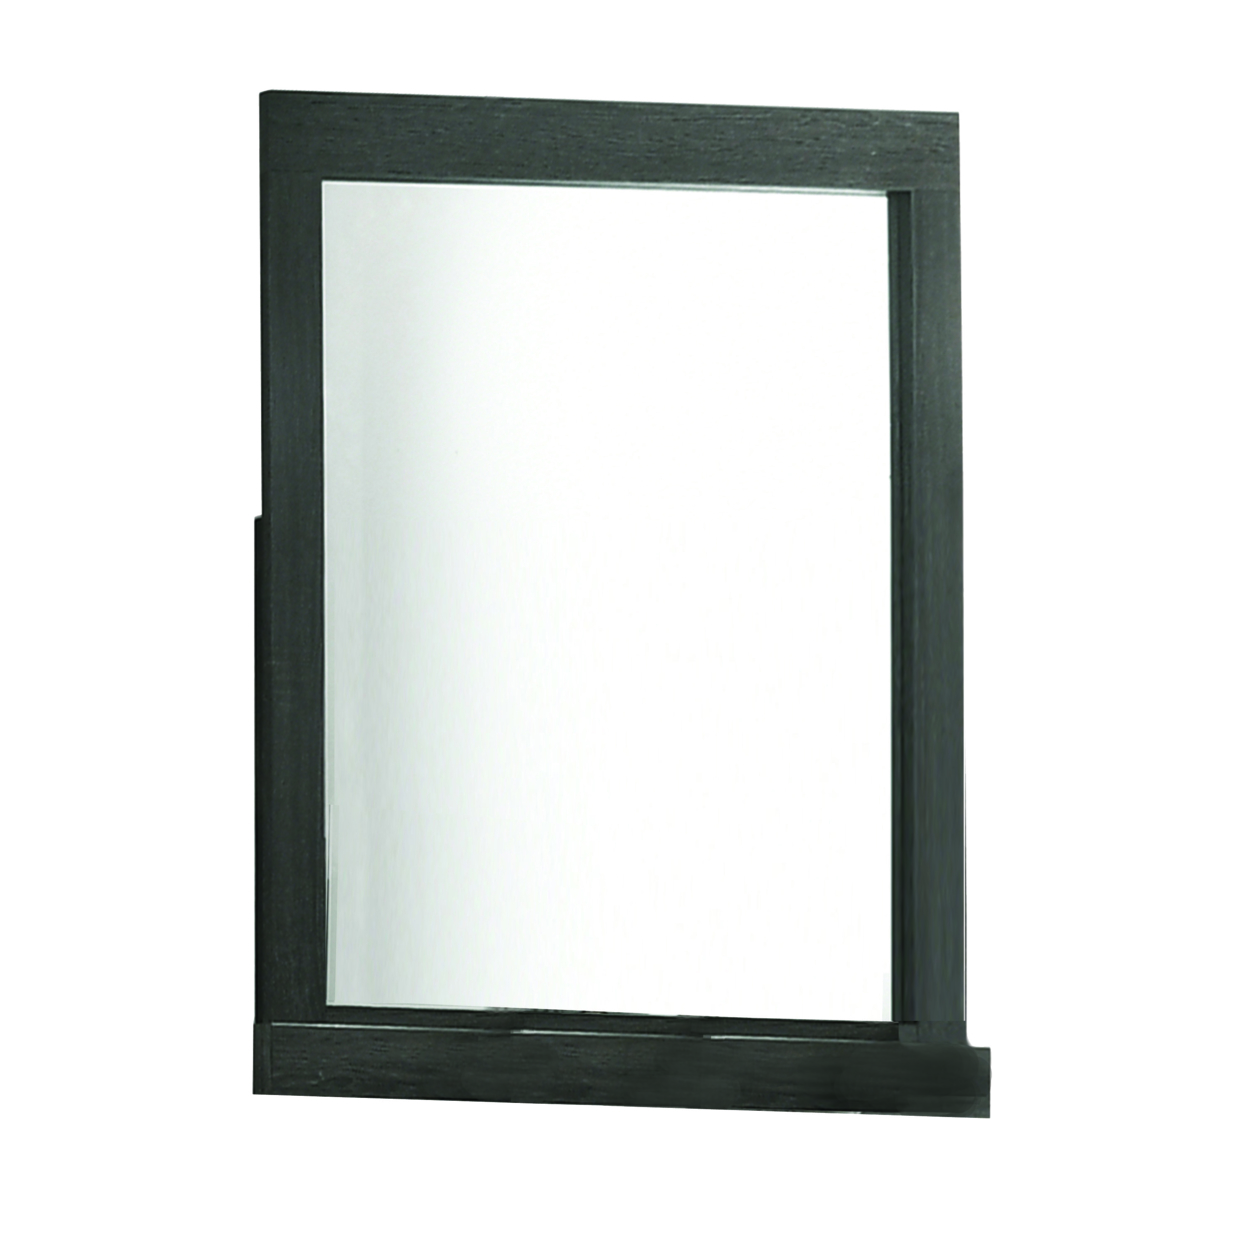 Rectangular Wooden Framed Mirror With Beveled Edge, Gray And Silver- Saltoro Sherpi